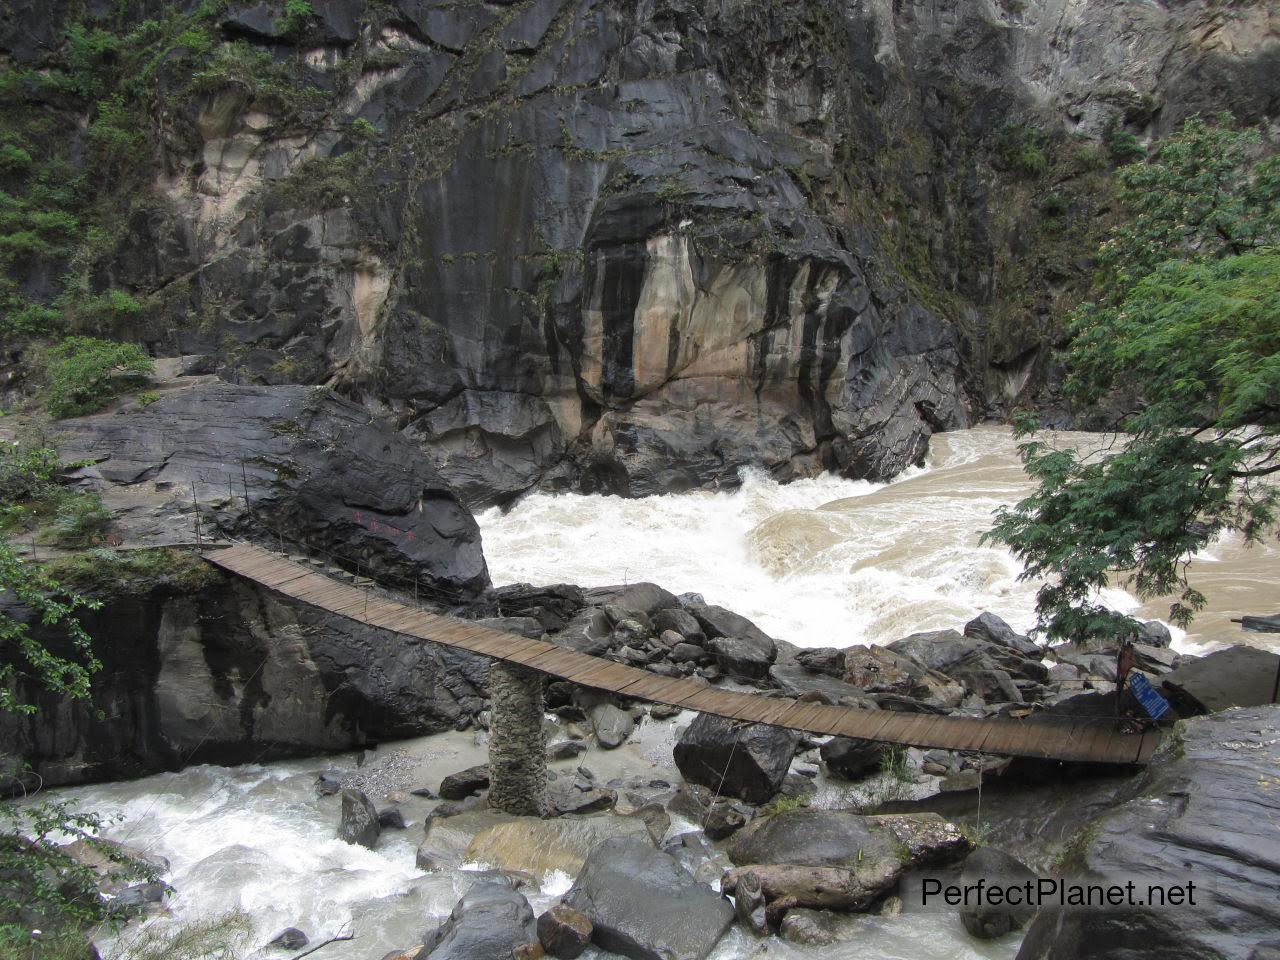 One of the suspension bridges of obligatory passage